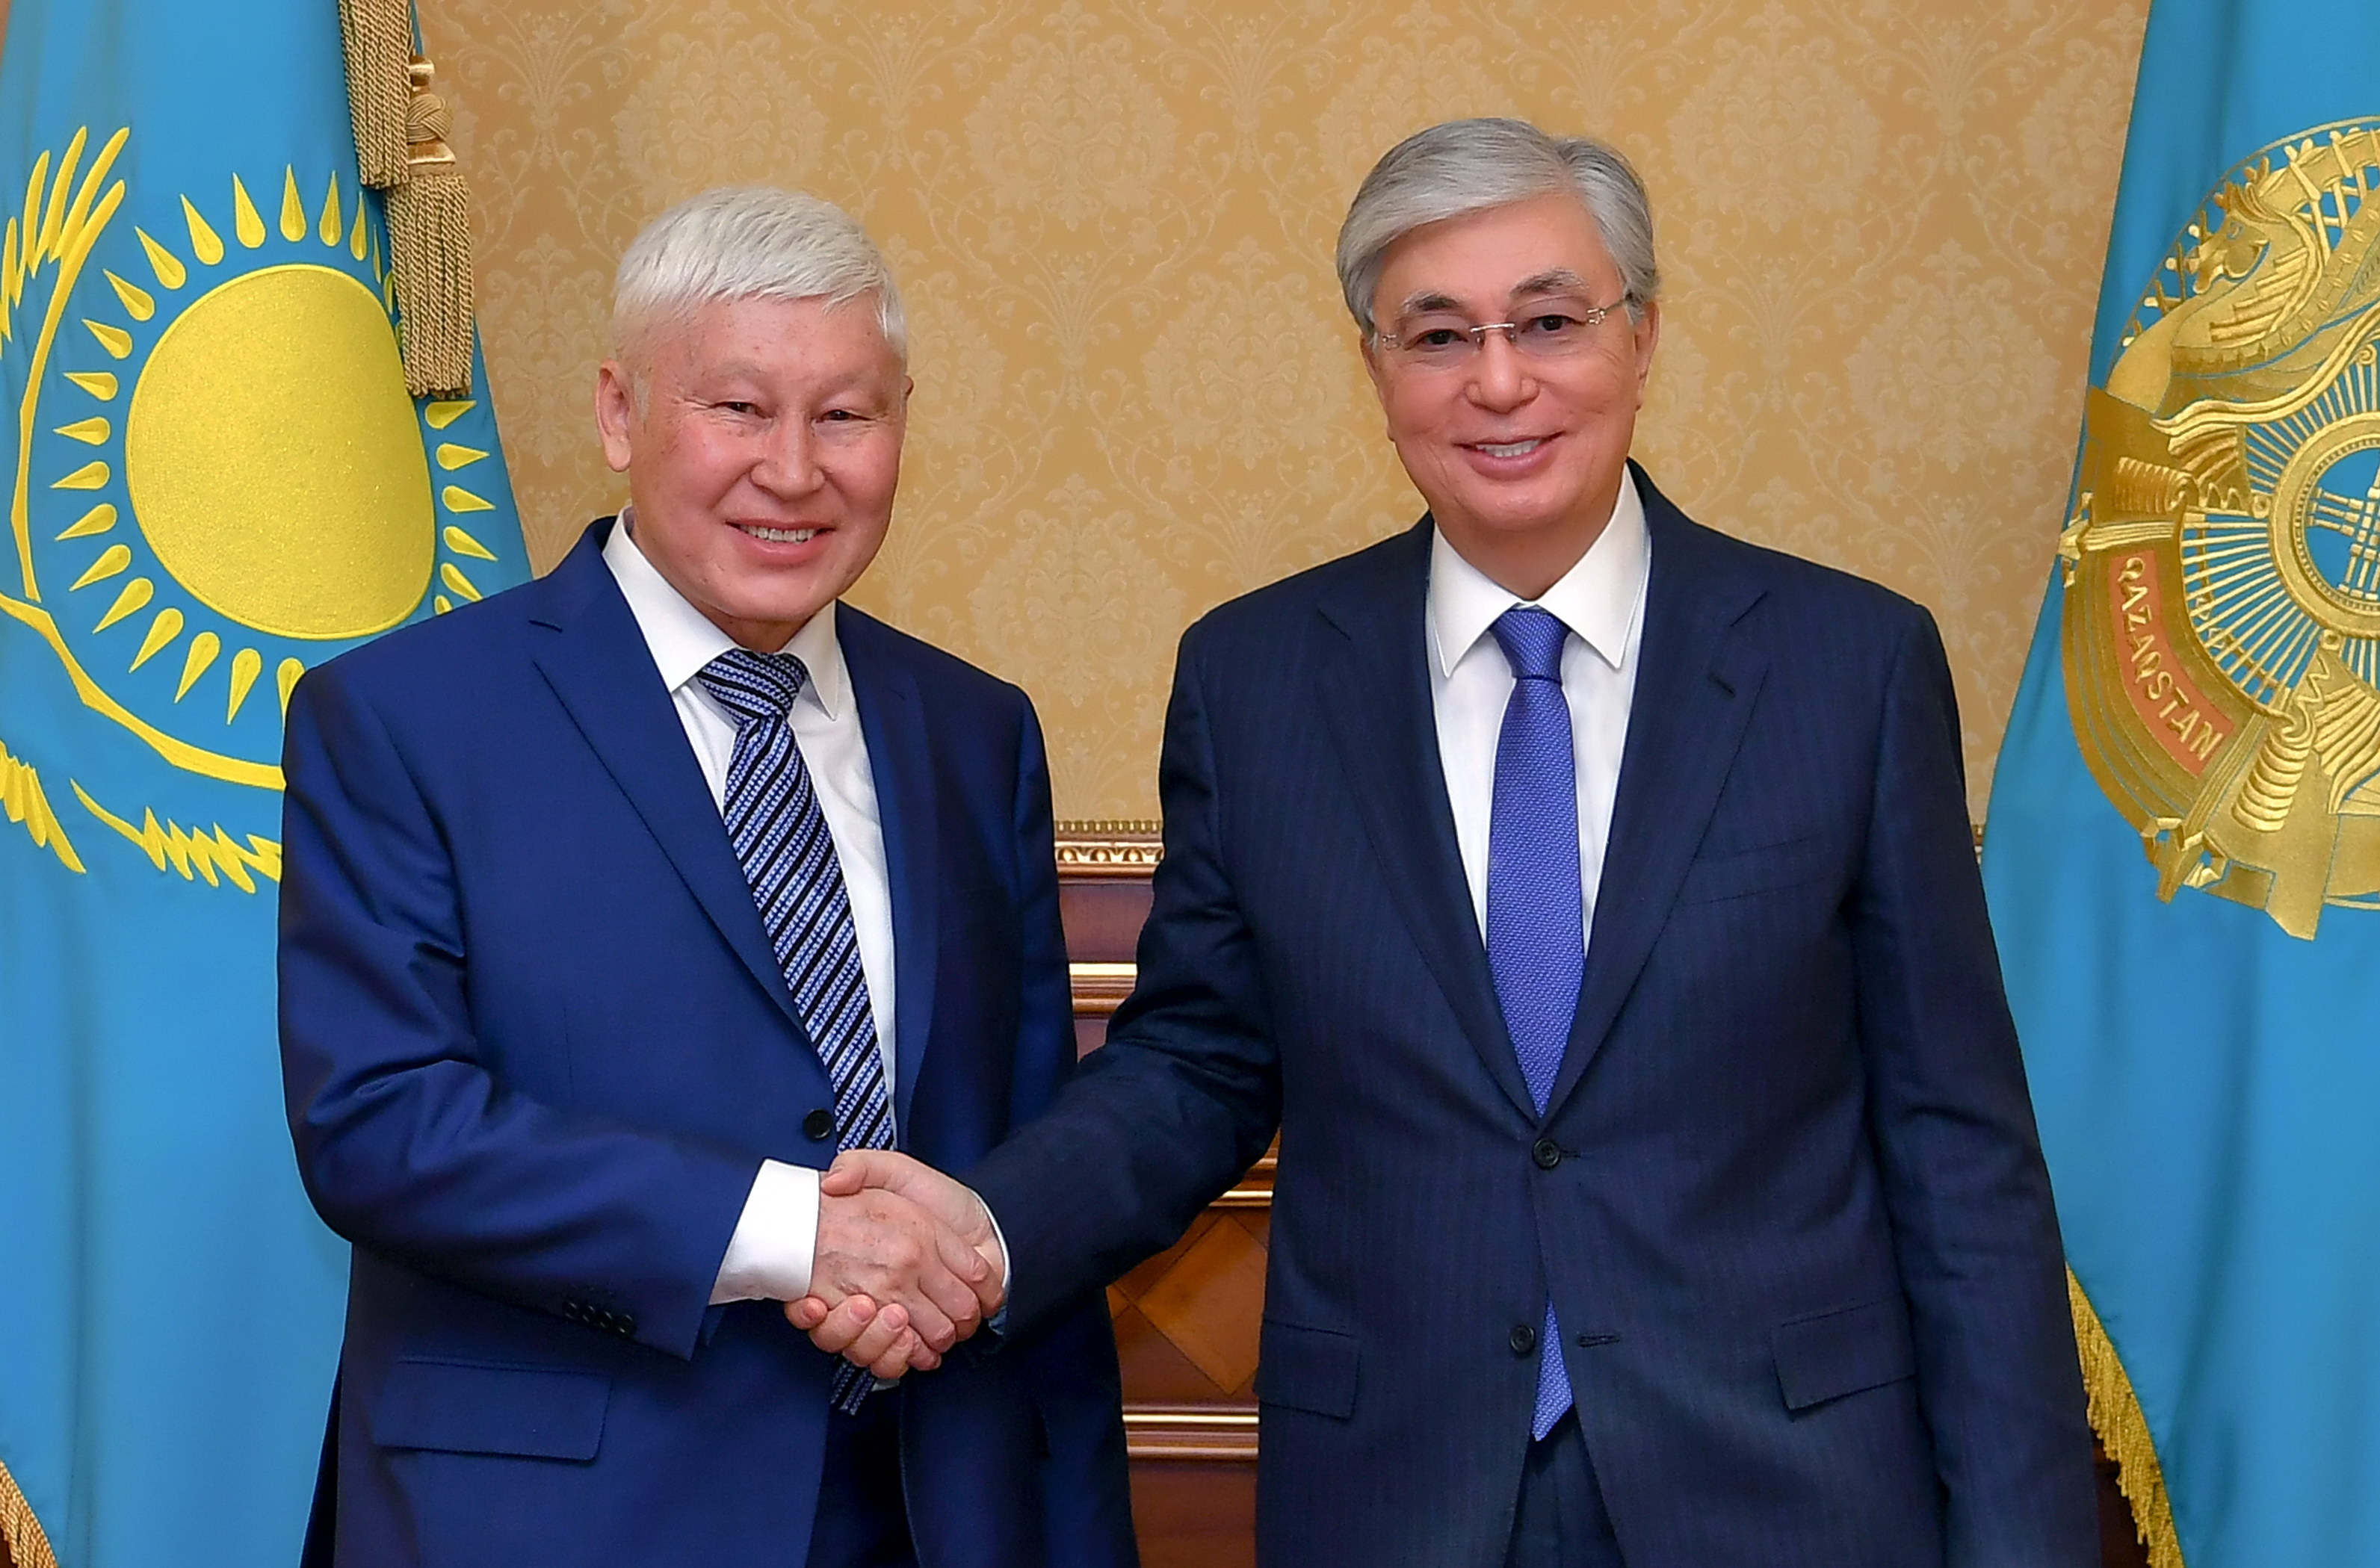 Head of state receives academician Askar Zhumadildayev